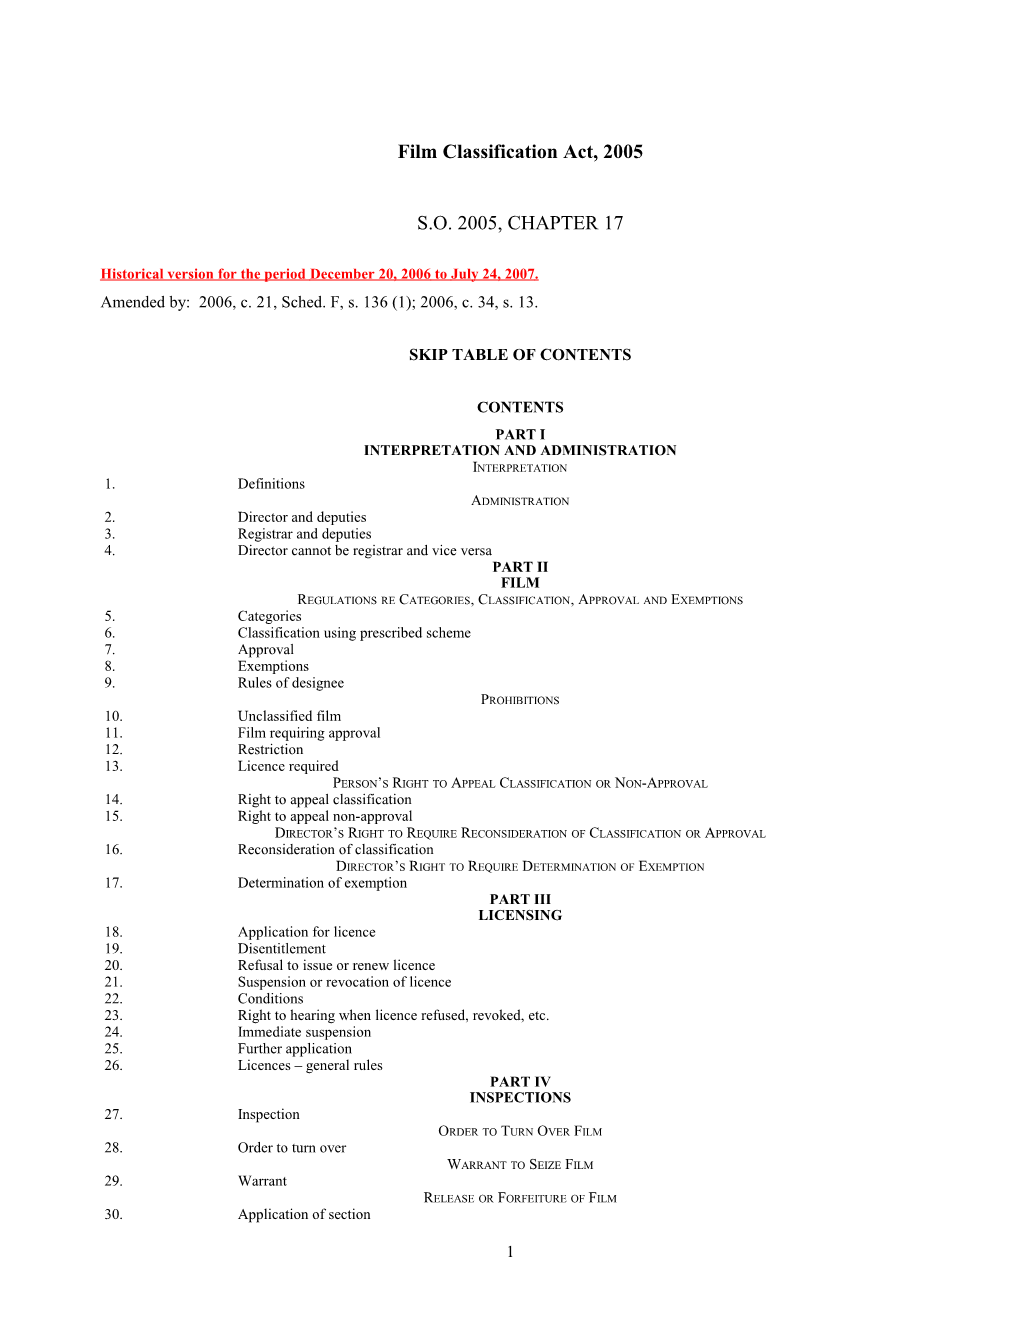 Film Classification Act, 2005, S.O. 2005, C. 17